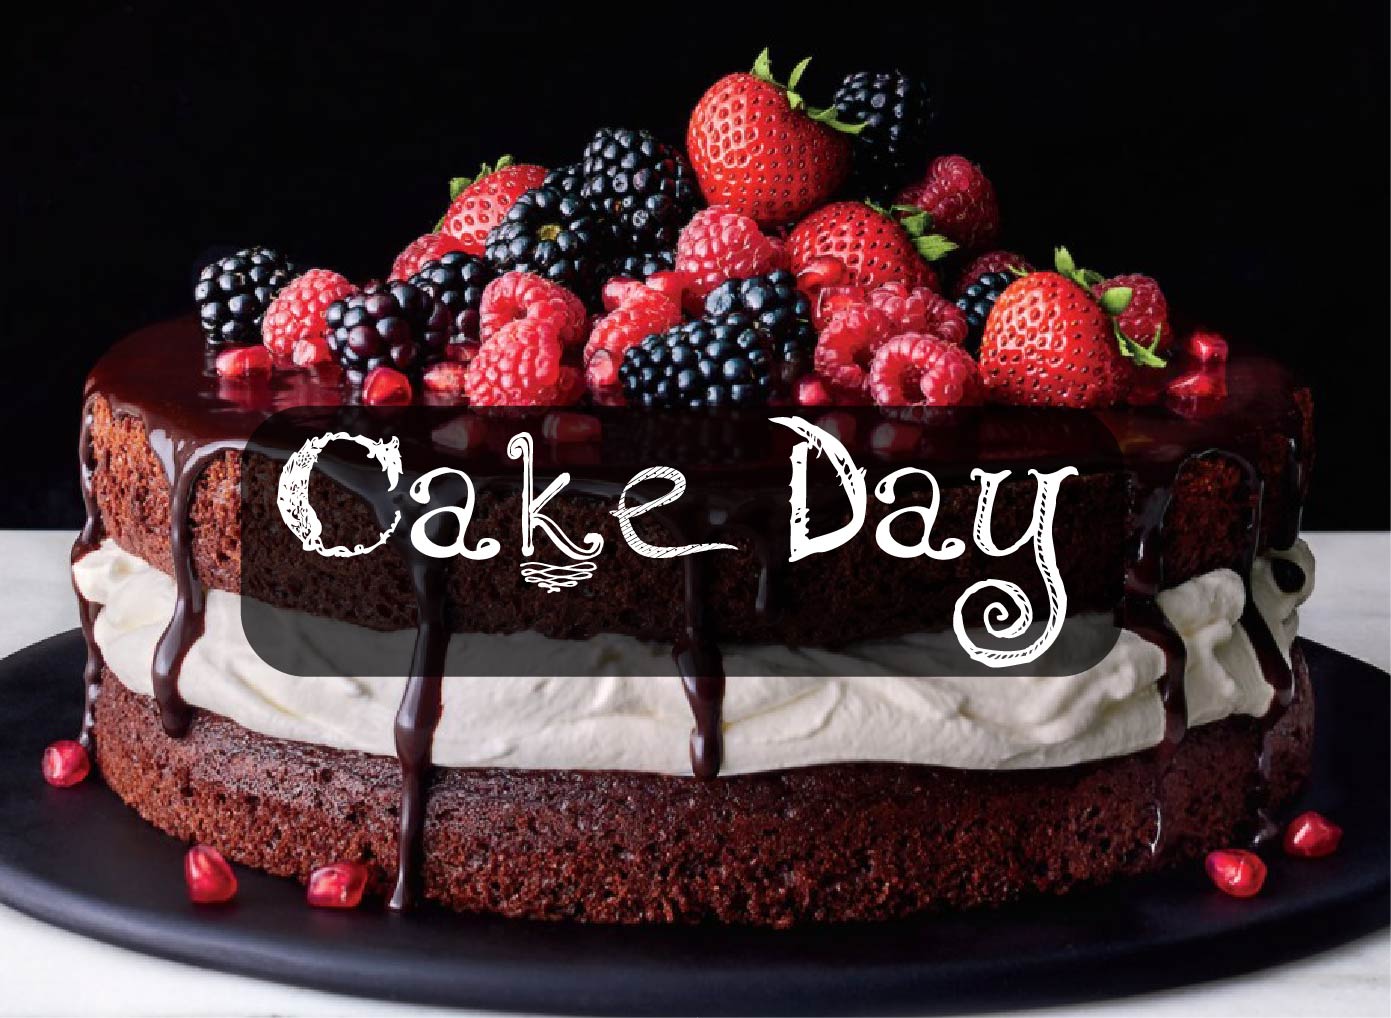 Cake Day, Cake day 2020, happy cake day 2020